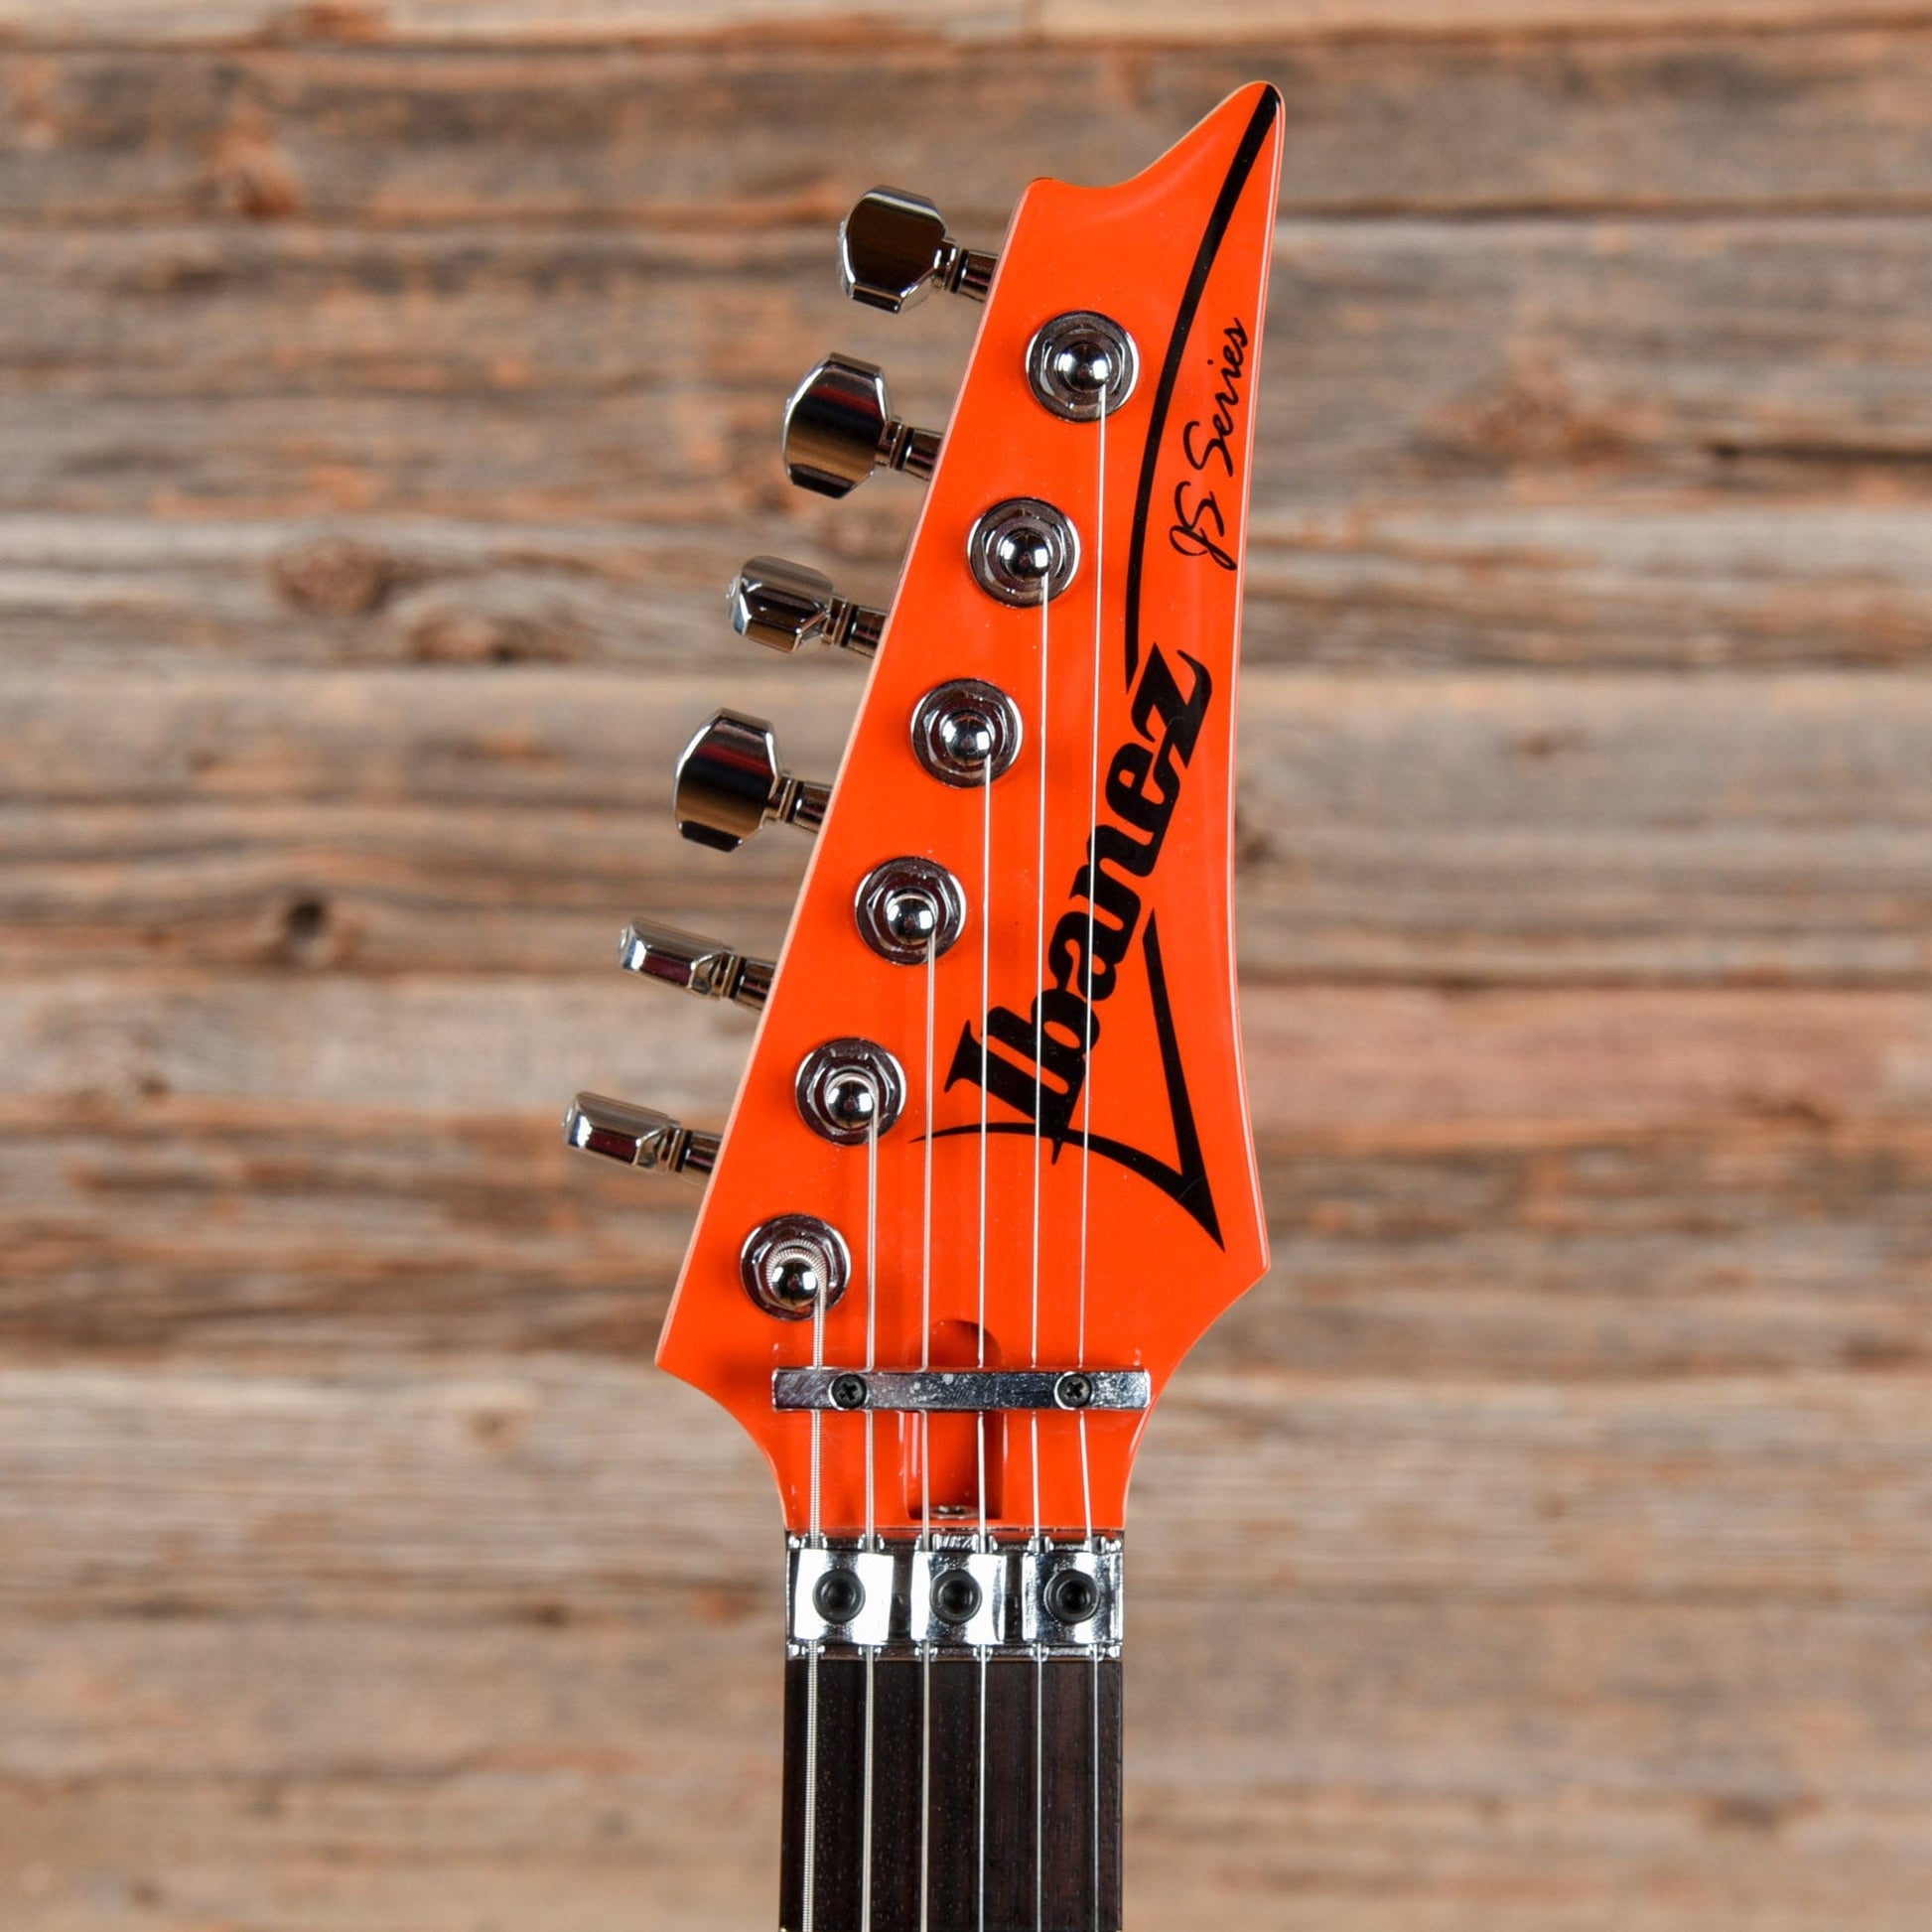 Ibanez JS2410 Joe Satriani Signature Muscle Car Orange 2018 Electric Guitars / Solid Body